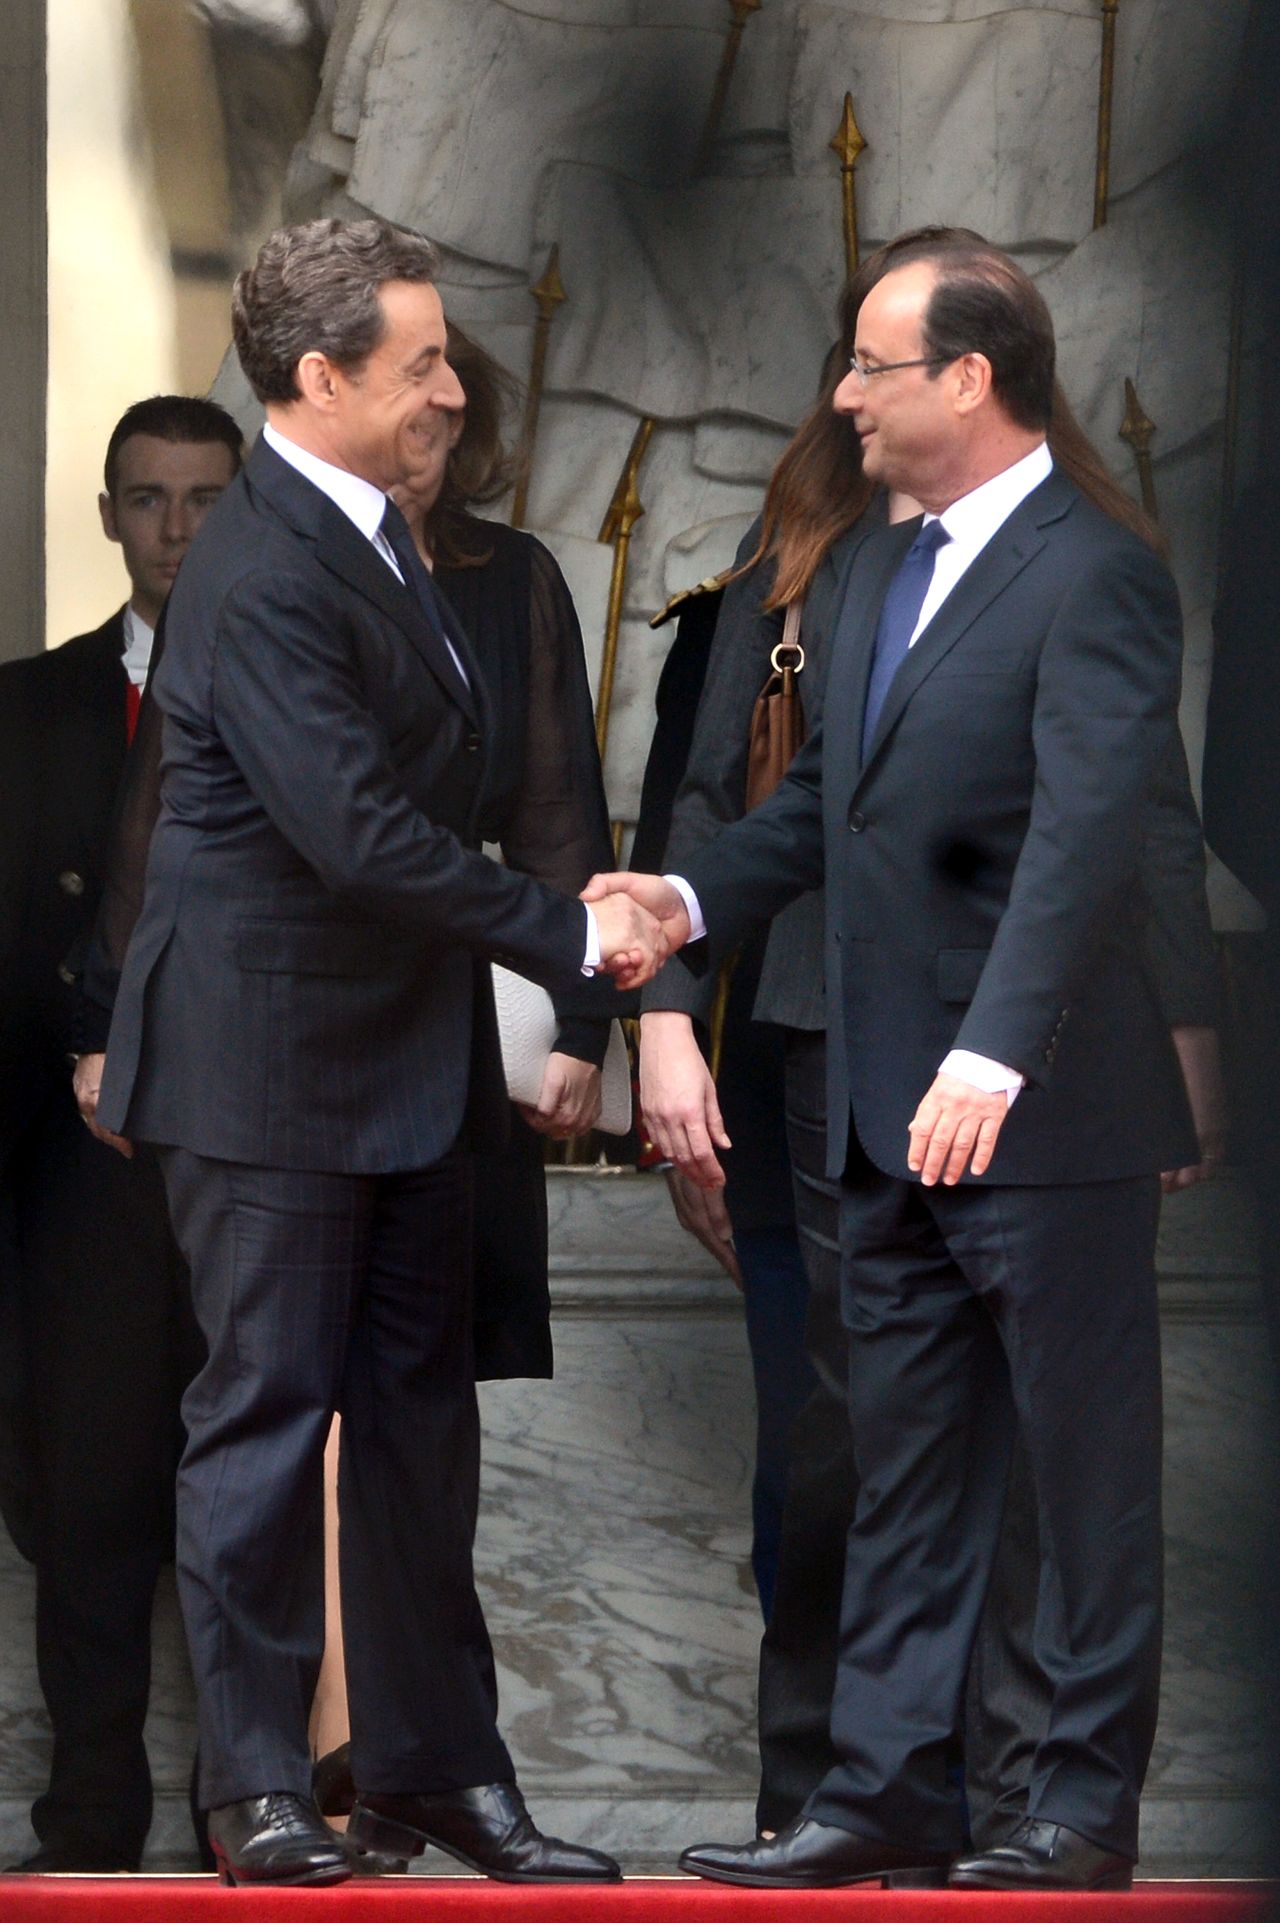 Outgoing President Nicolas Sarkozy, left, welcomes his successor at the Élysée Palace.